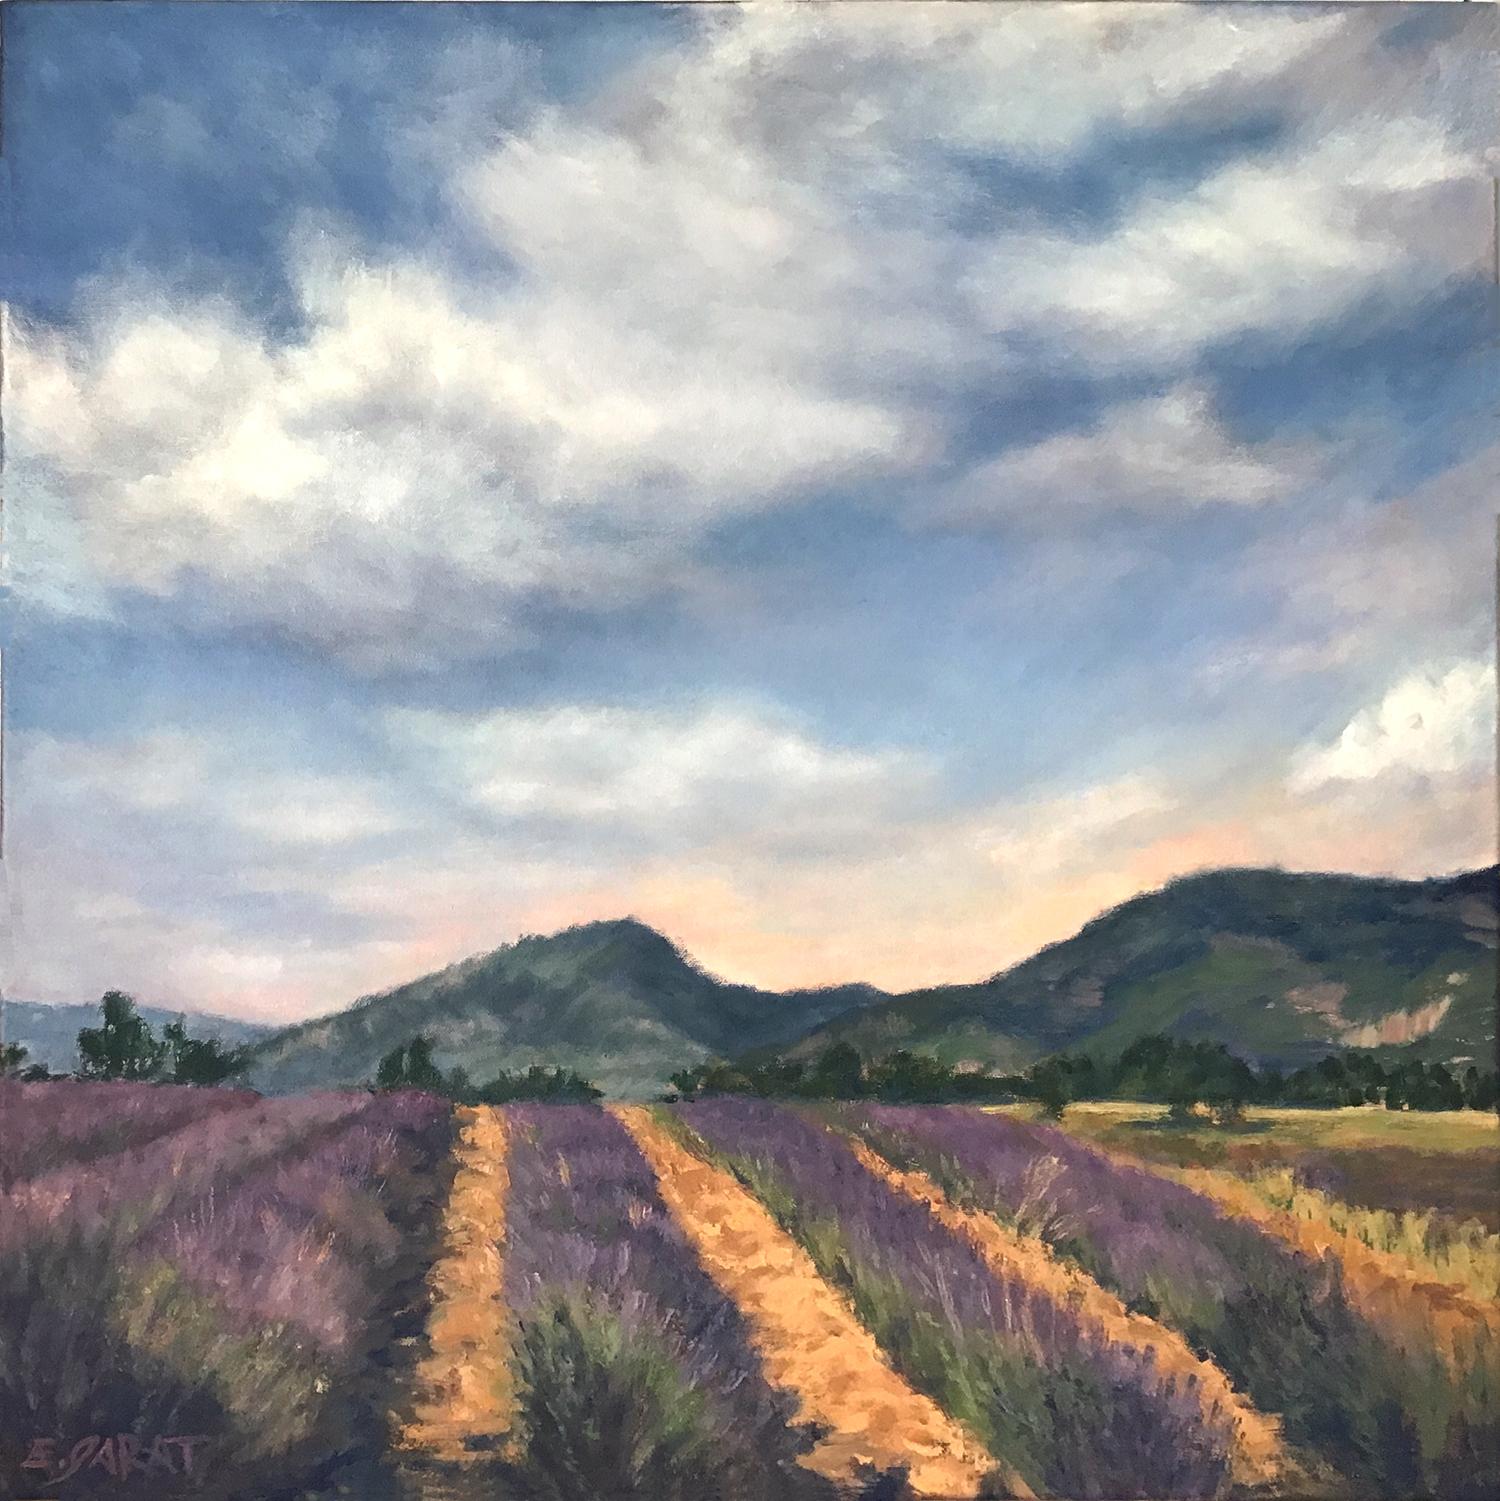 Elizabeth Garat Landscape Painting - Rows of Lavender, Peach Light Above the Hills, Oil Painting